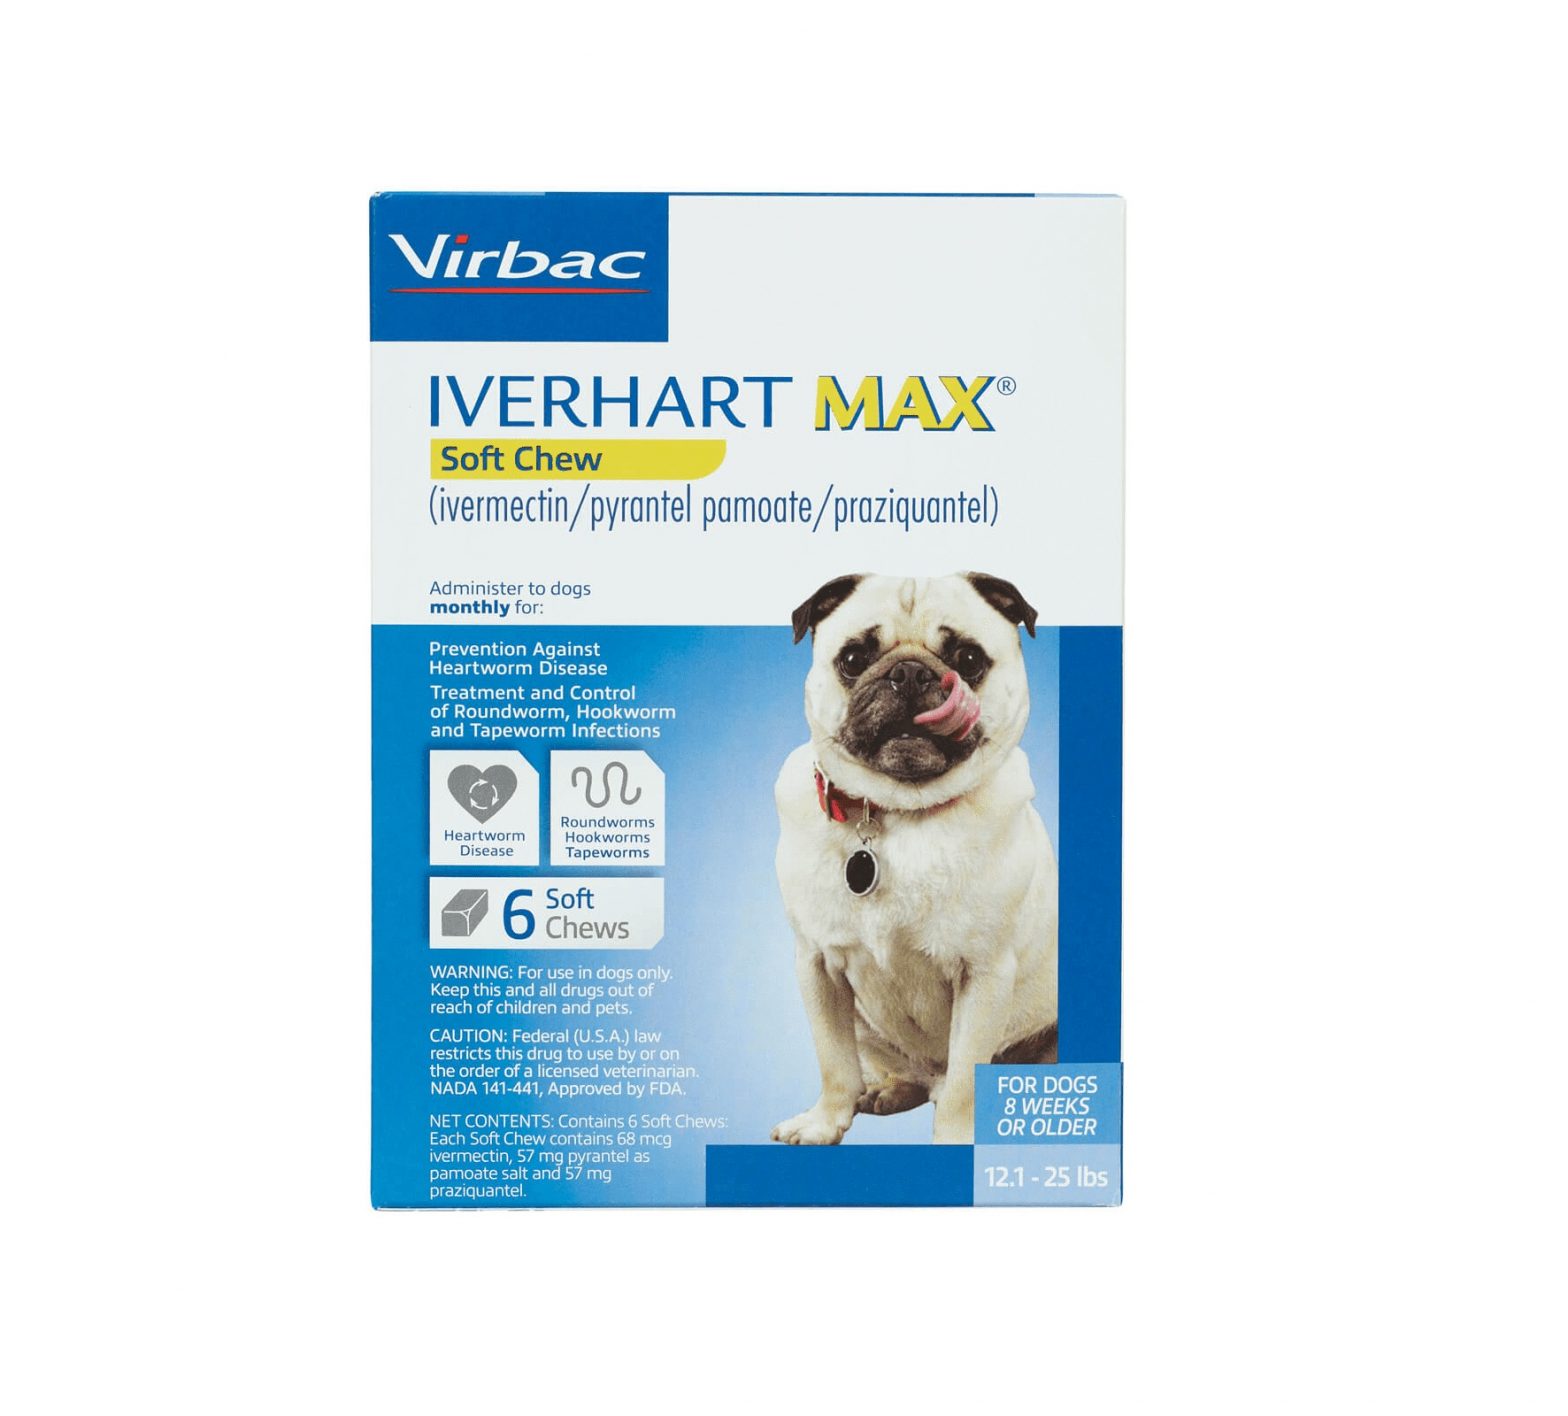 Virbac IVERHART MAX CHEW (ivermectin/pyrantel pamoate/praziquantel) Instructions